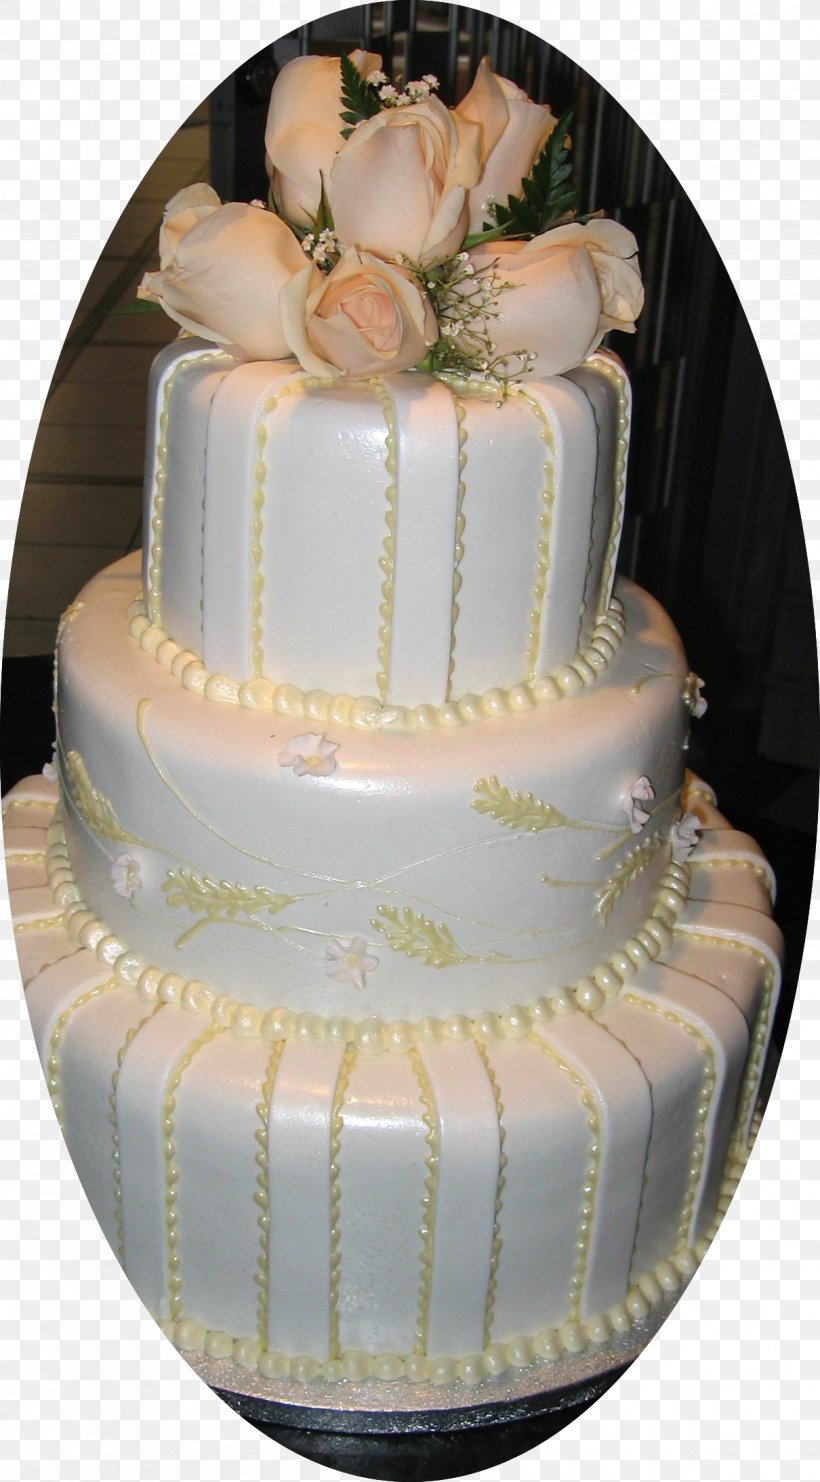 Wedding Cake Torte Cake Decorating Royal Icing Buttercream, PNG, 1210x2188px, Wedding Cake, Buttercream, Cake, Cake Decorating, Fondant Download Free